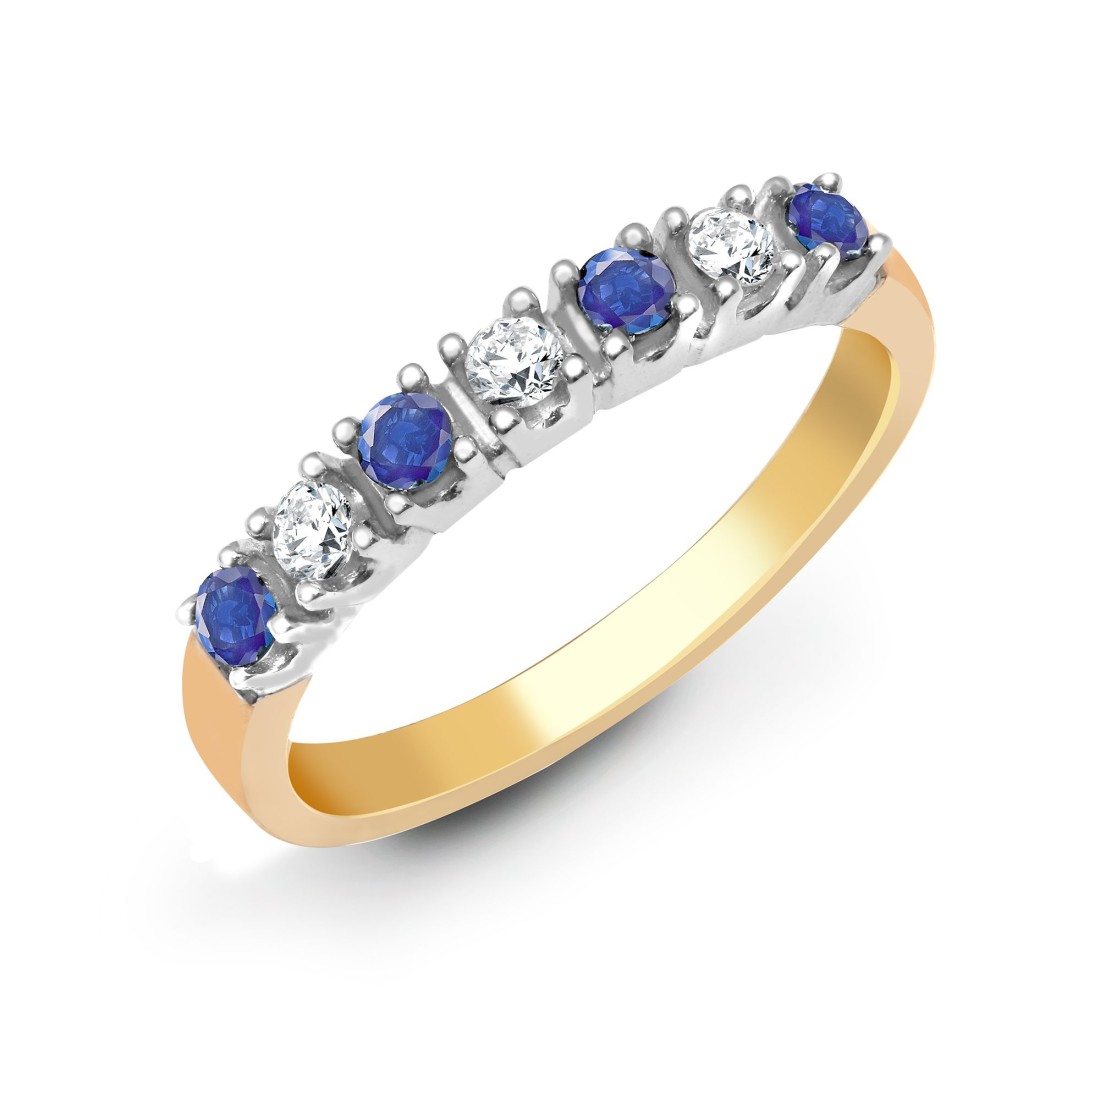 0.30 Carat Half Eternity Ring with Blue Sapphire And Diamond Set